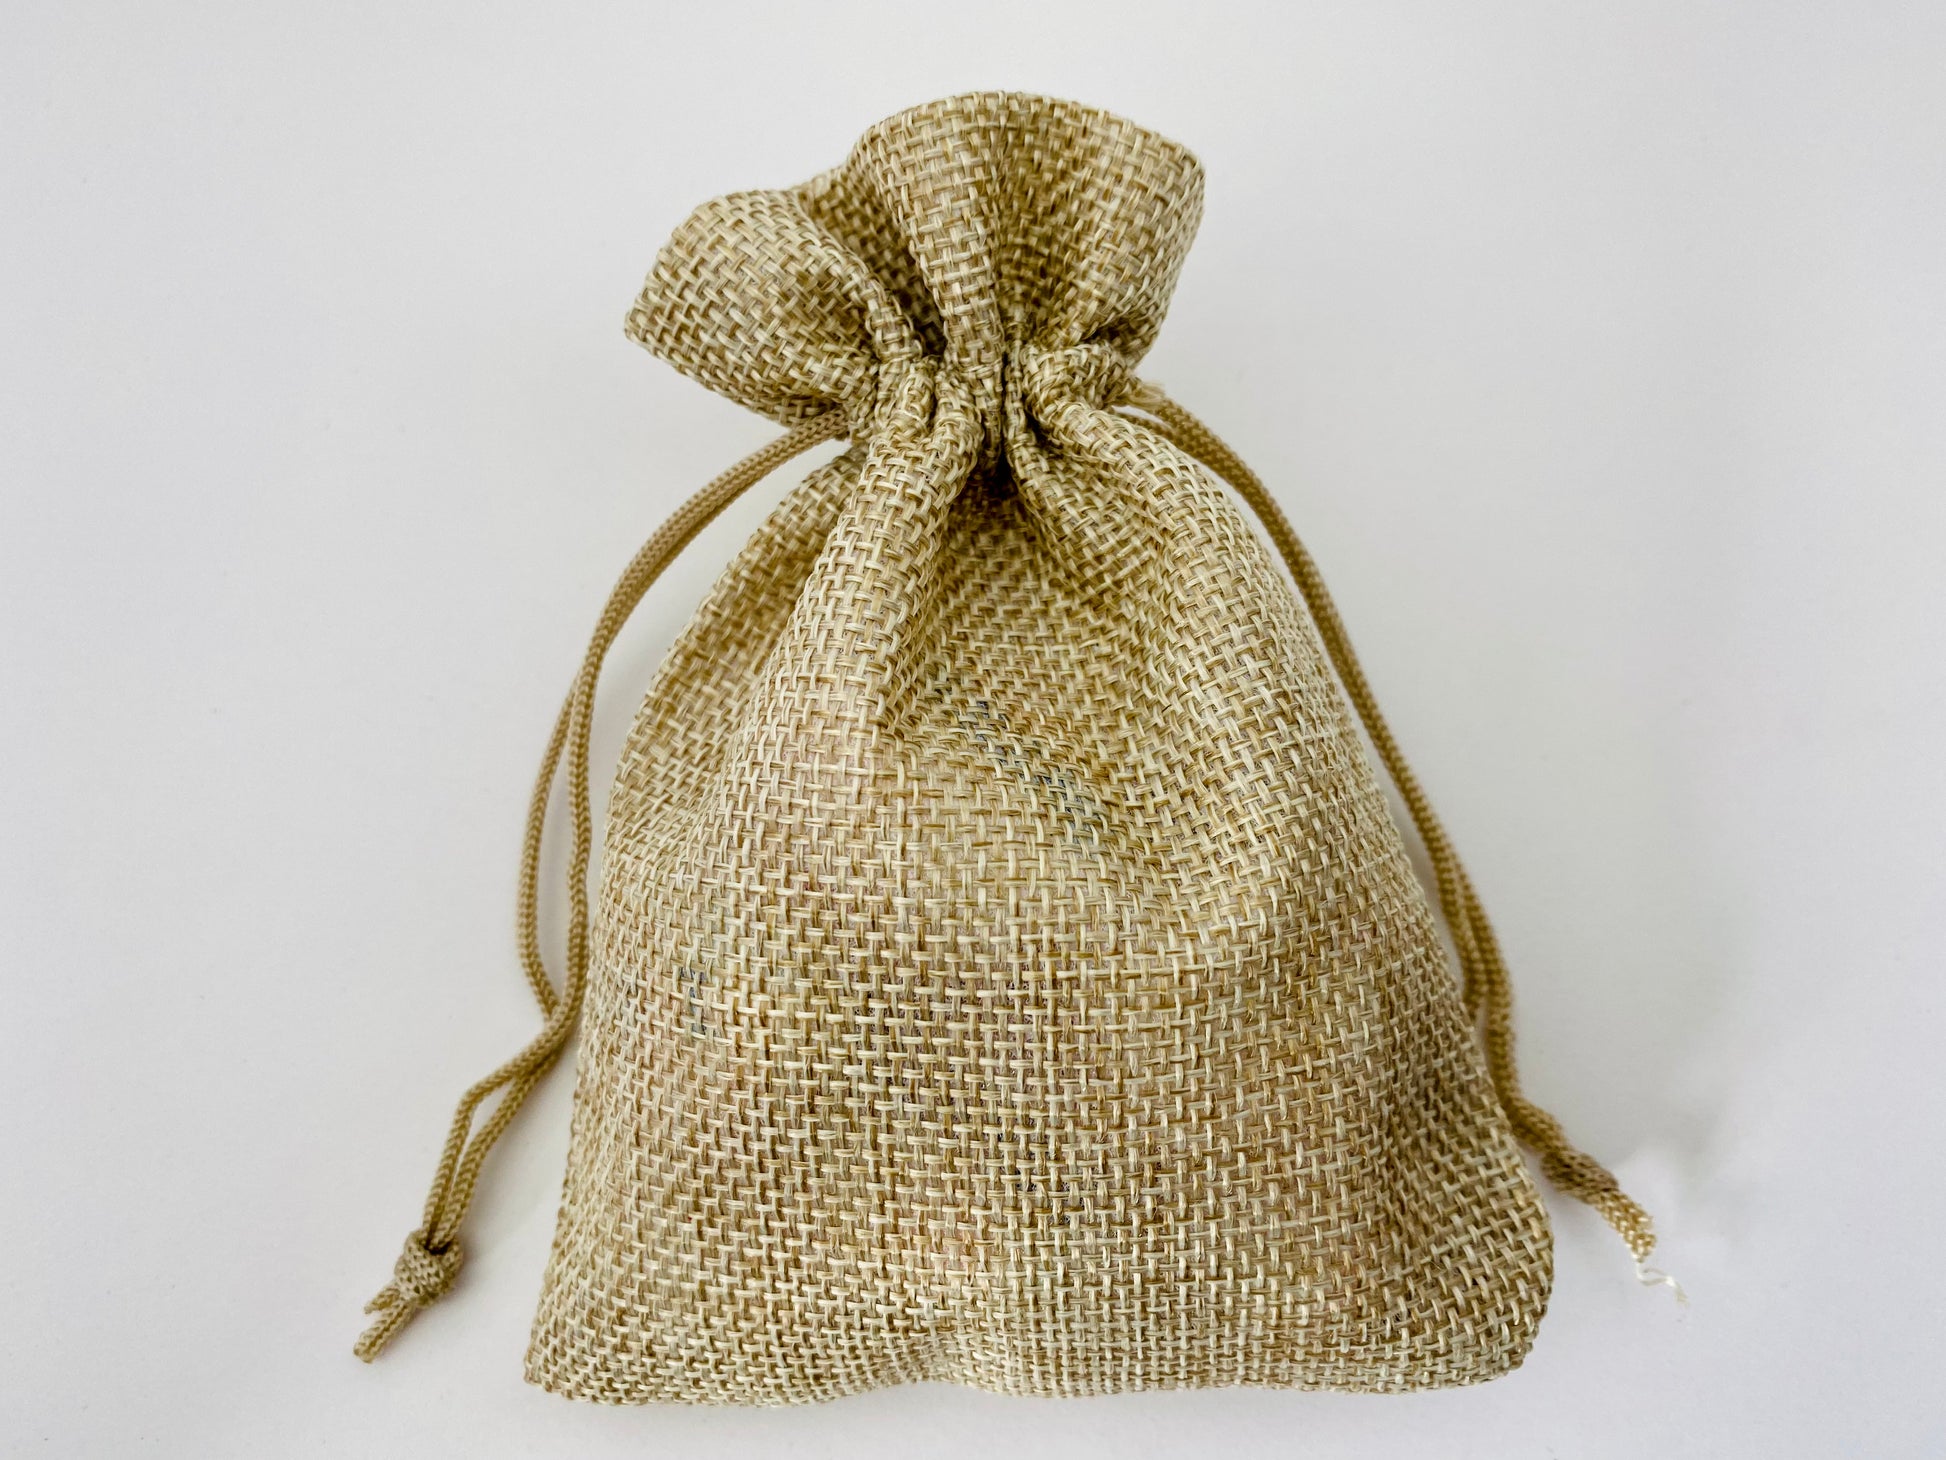 A hessian bag with pebbles inside